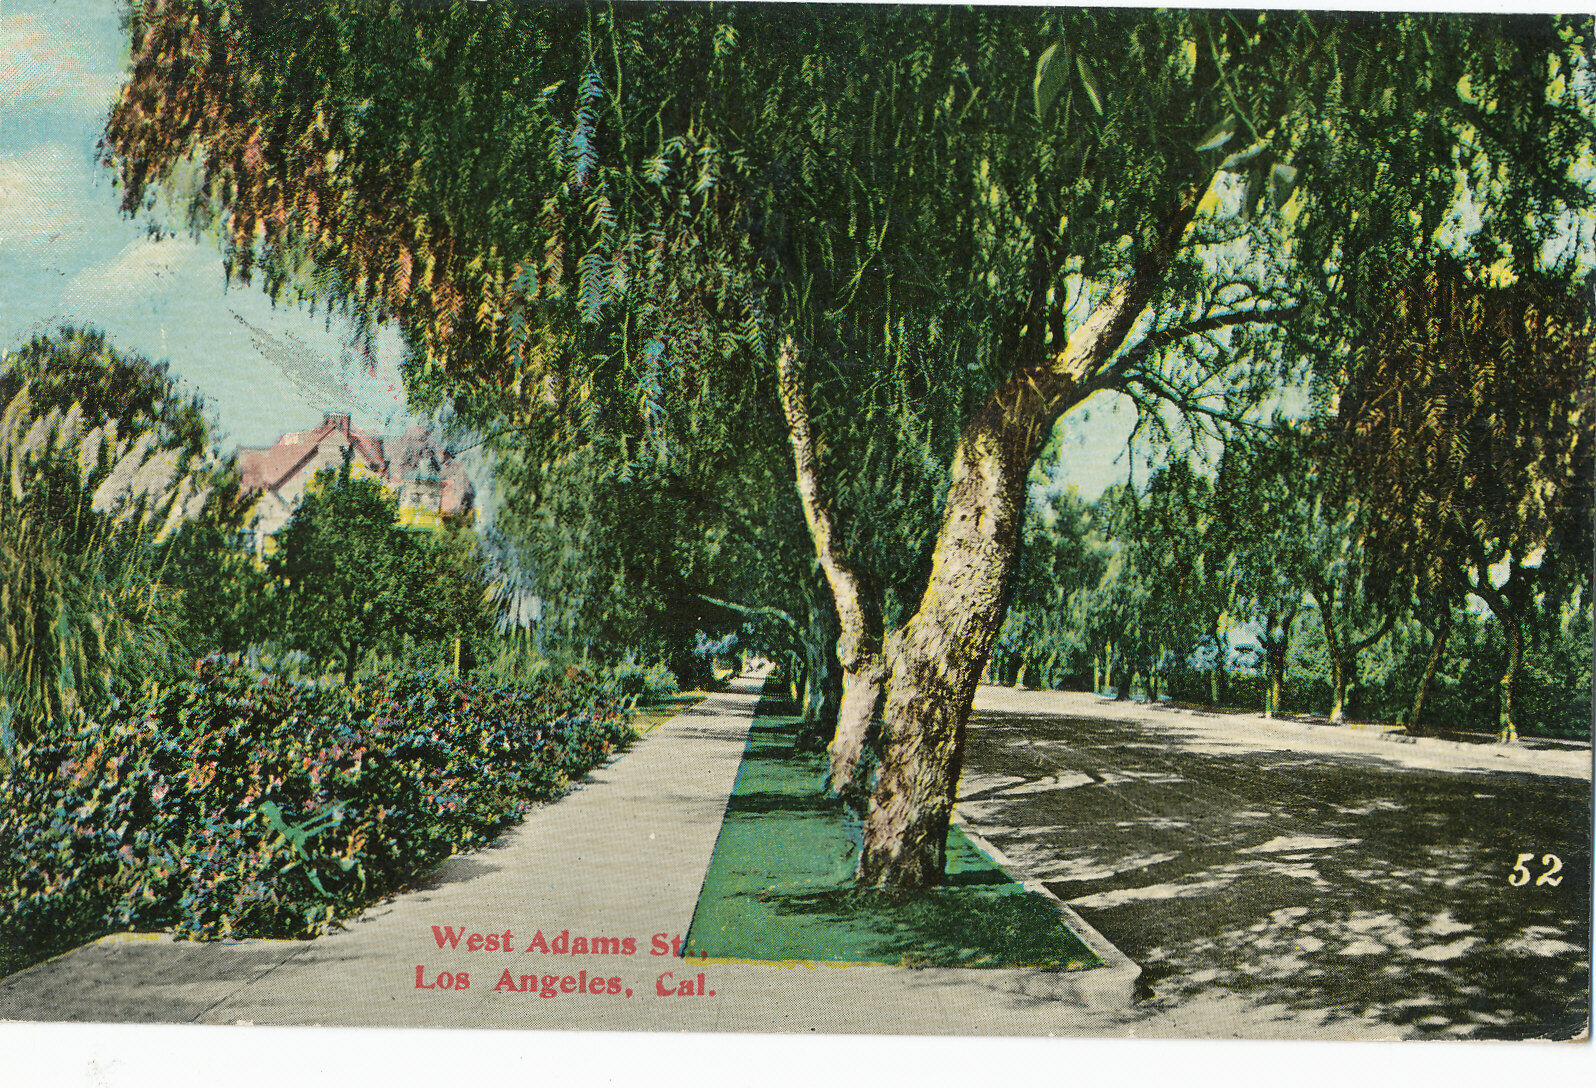 CA, LOS ANGELES - WEST ADAMS ST VIEW - 1912 postcard